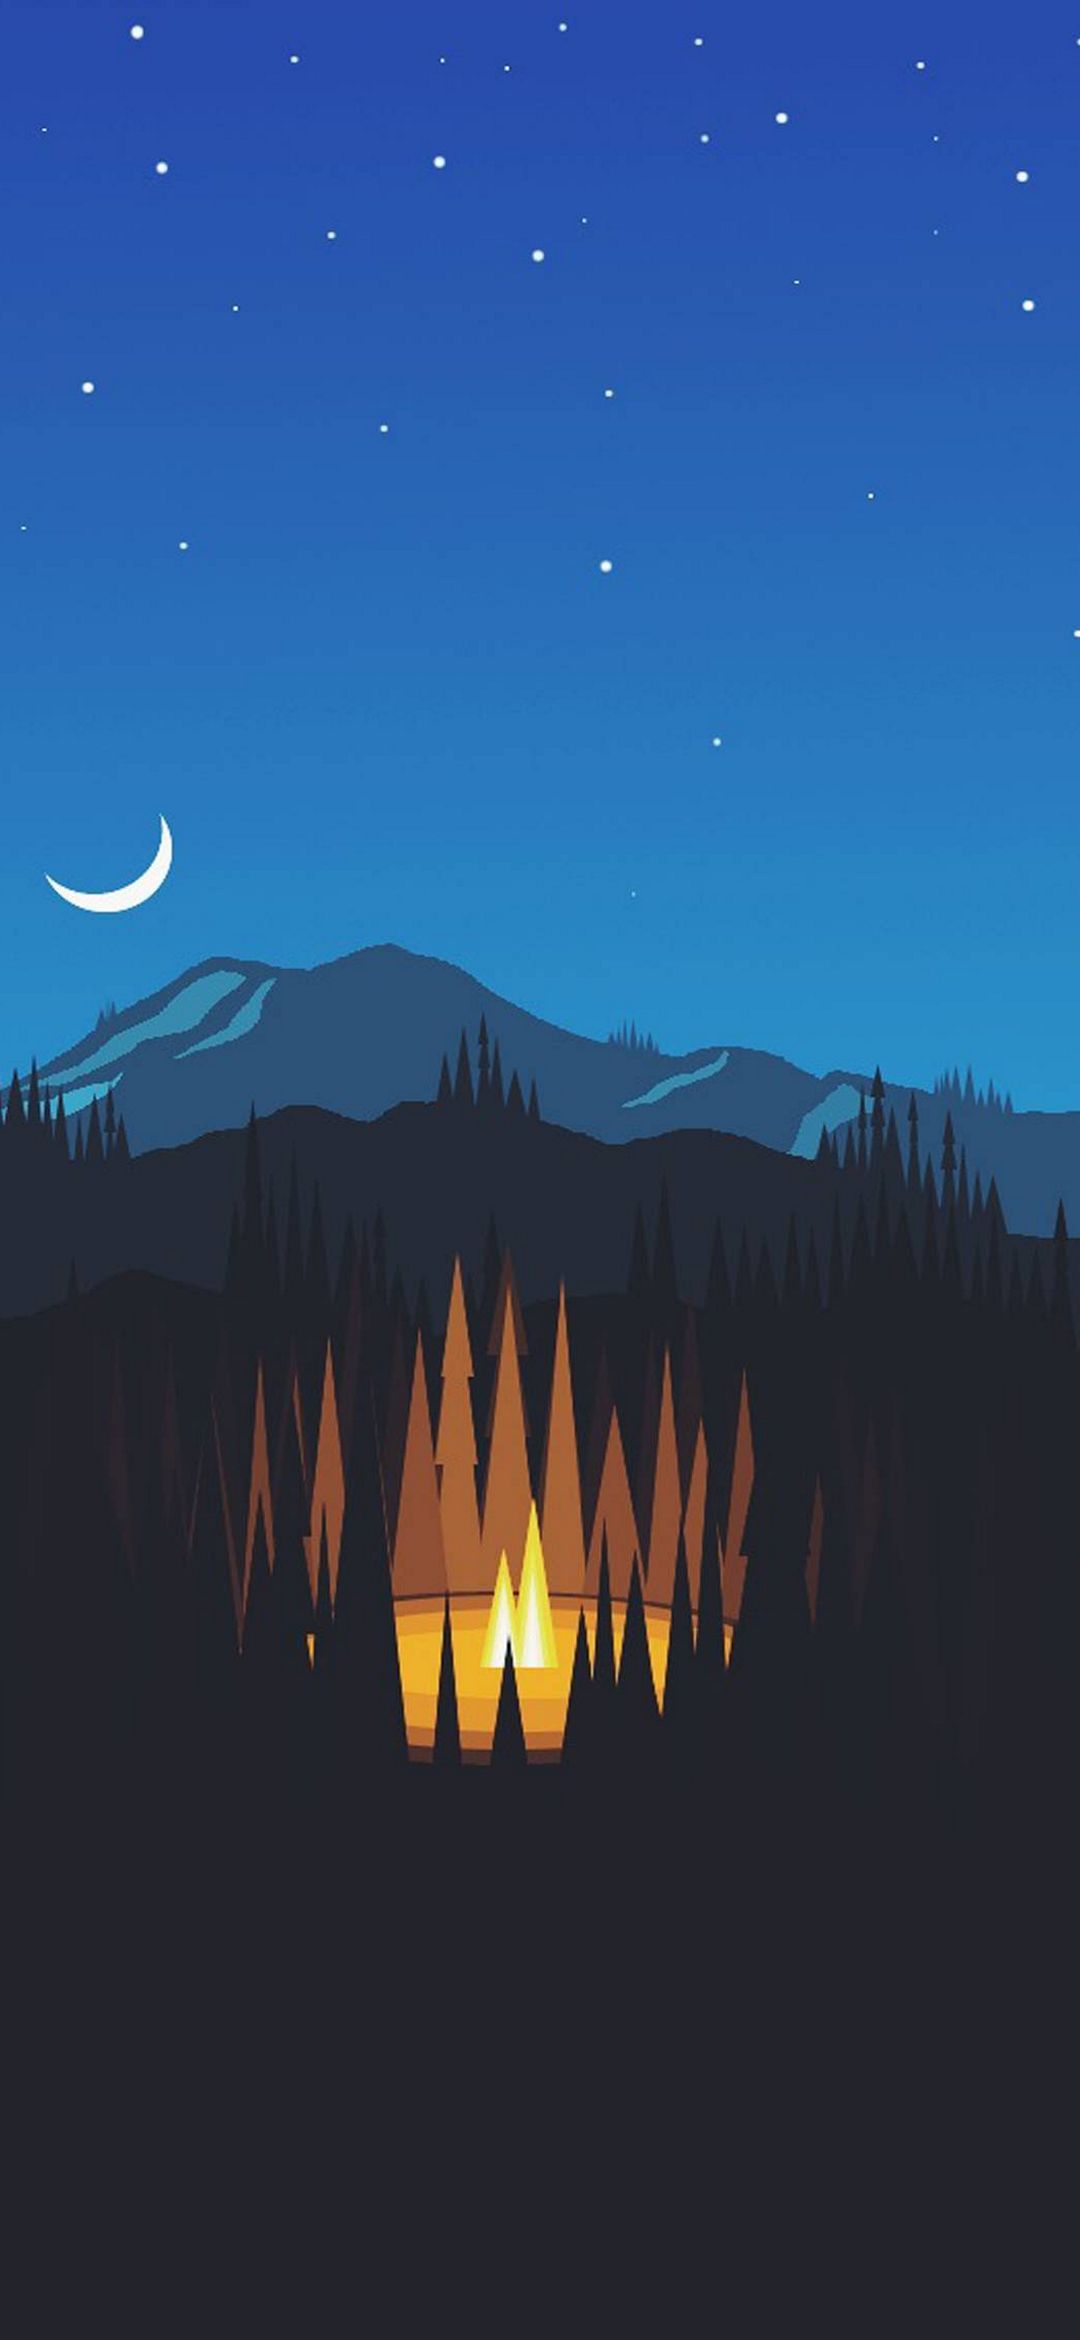 Night Landscape Minimal 4K Mobile Wallpaper Download Free ⋆ Traxzee